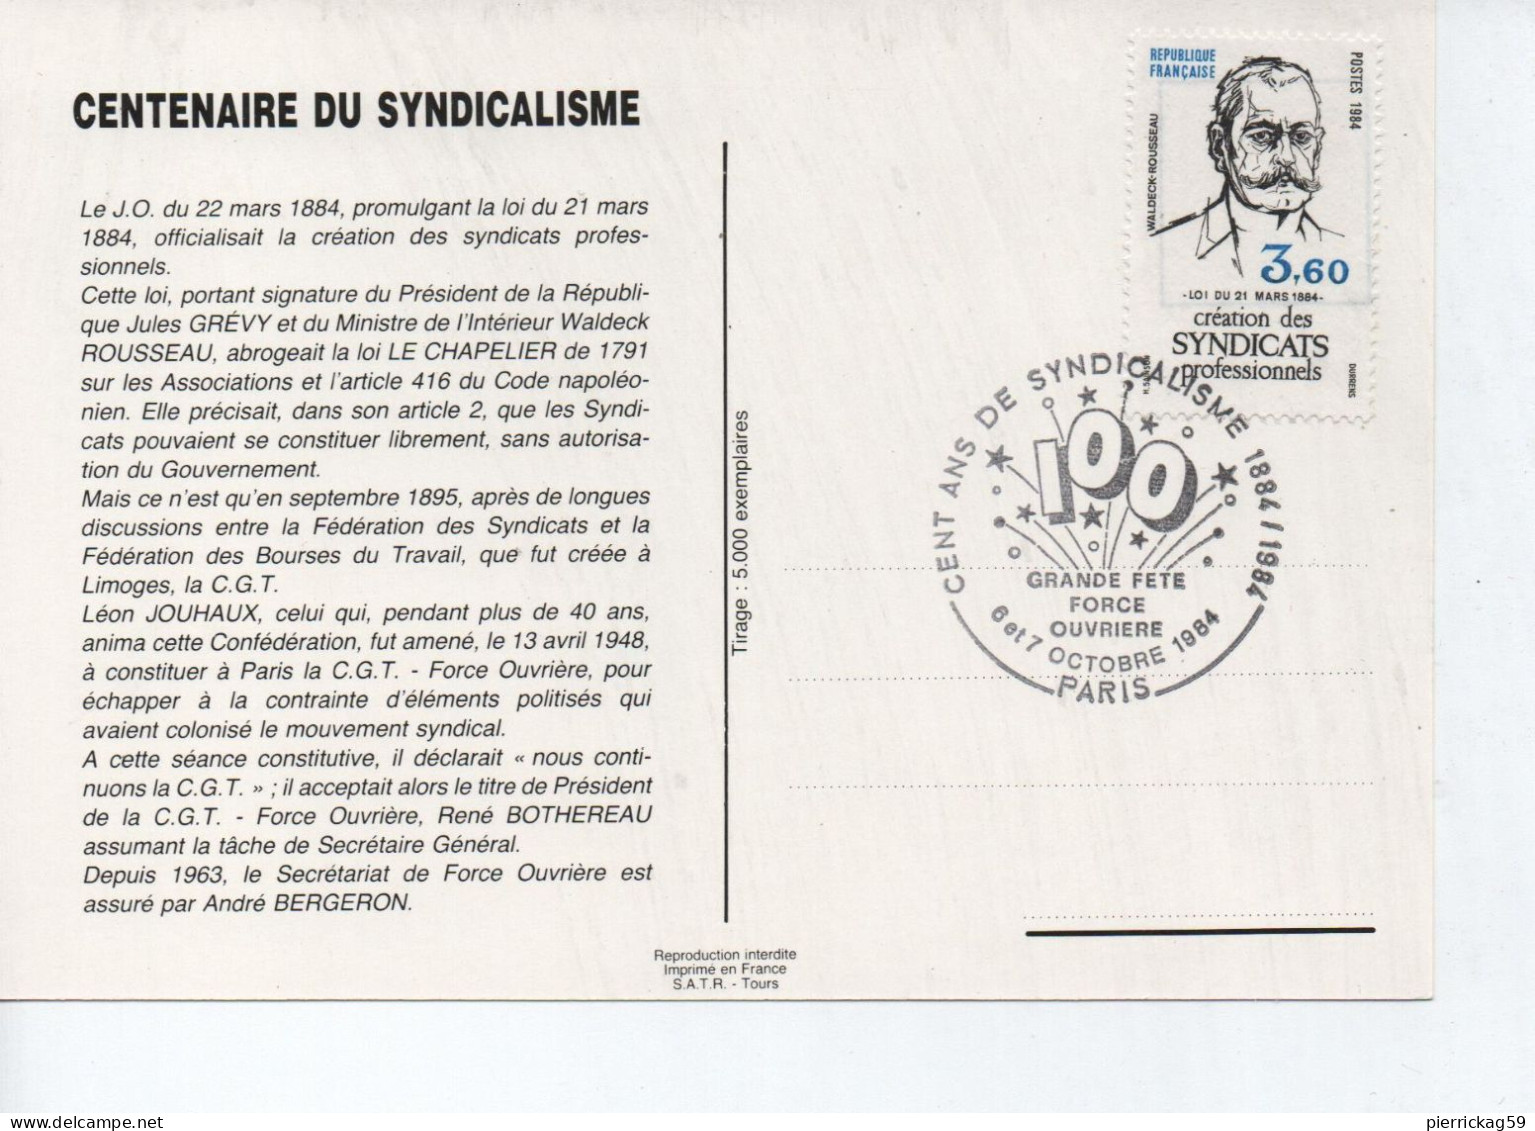 CPM  LE SYNDICALISME A 100 ANS 1884  / 1984 - Syndicats